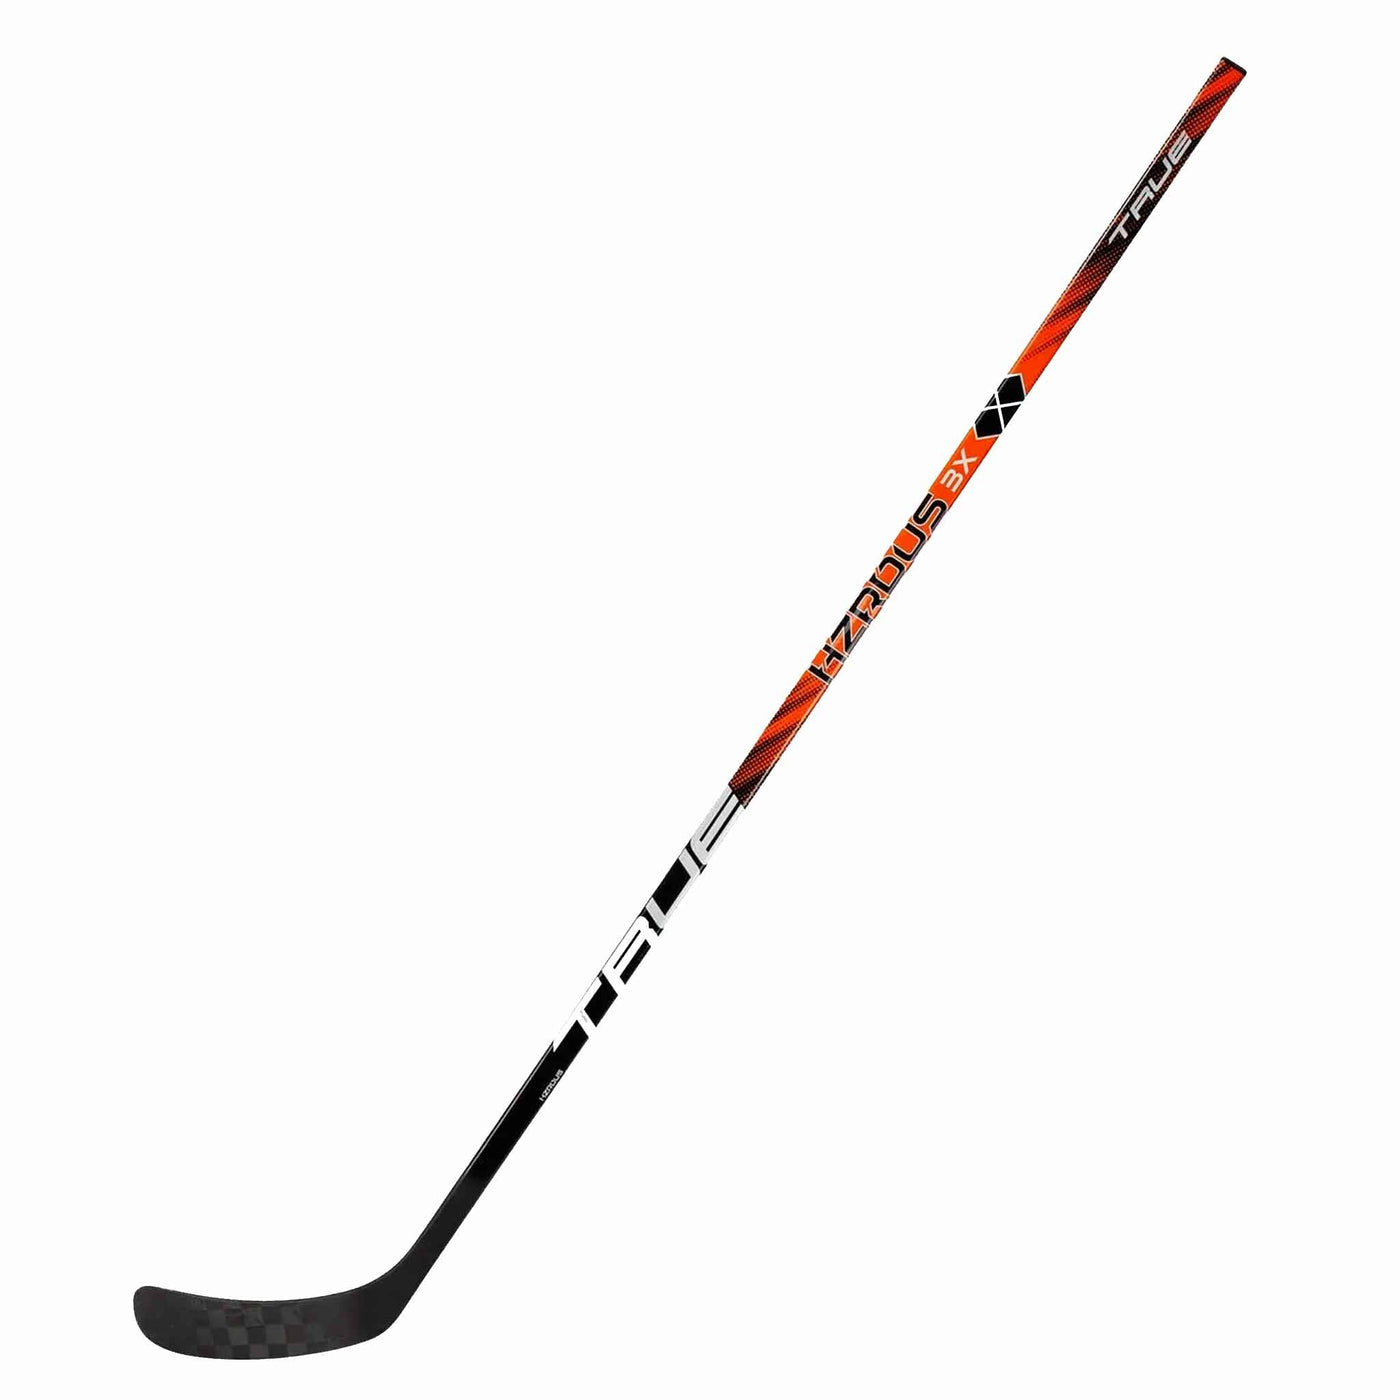 TRUE HZRDUS 3X Intermediate Hockey Stick - TheHockeyShop.com